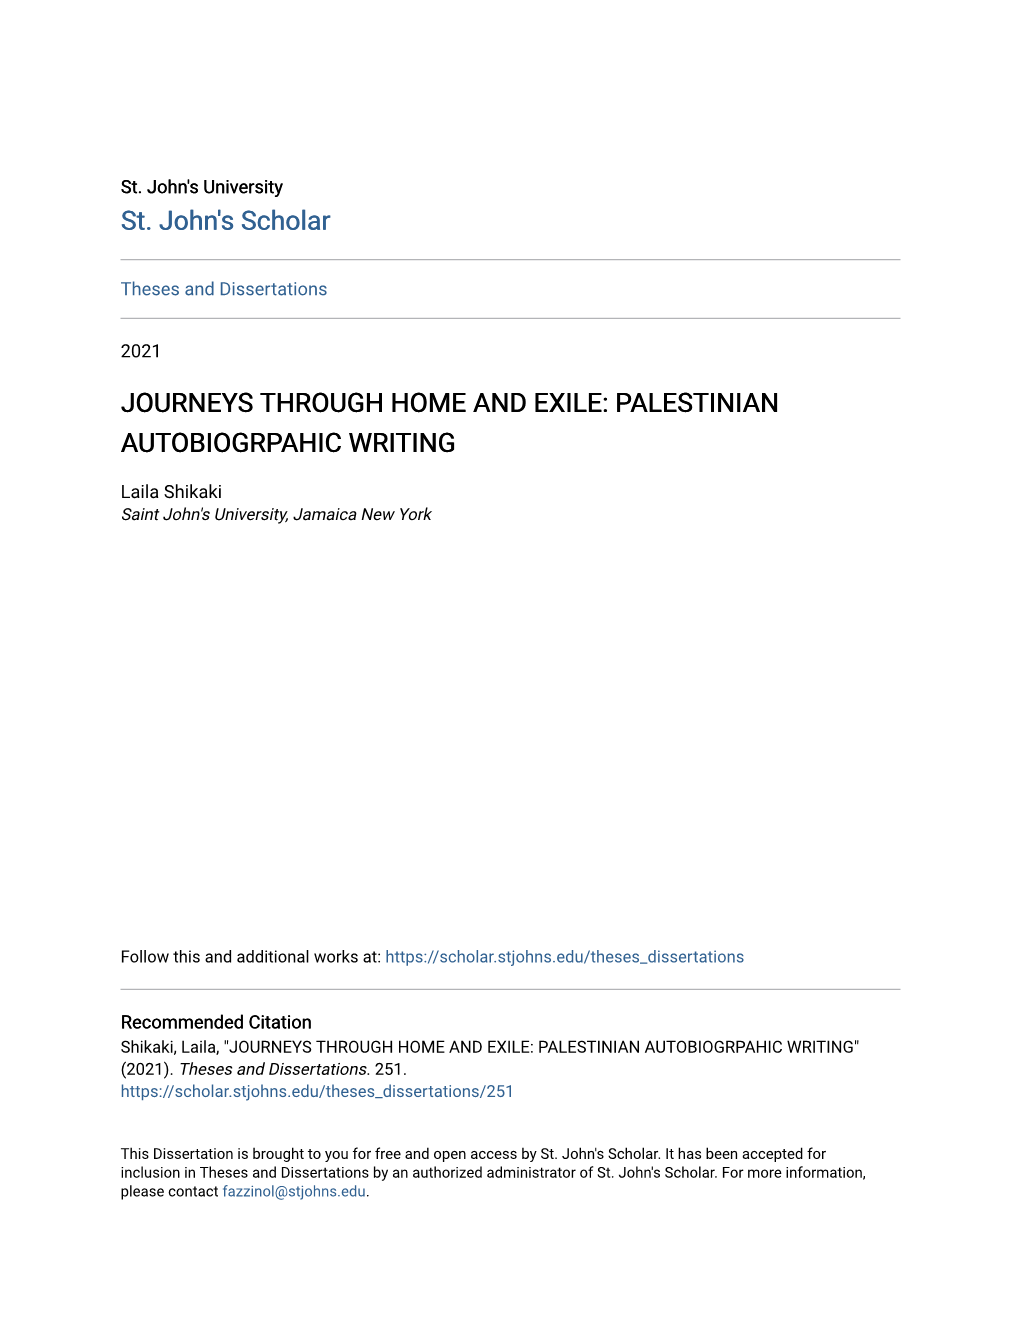 Palestinian Autobiogrpahic Writing